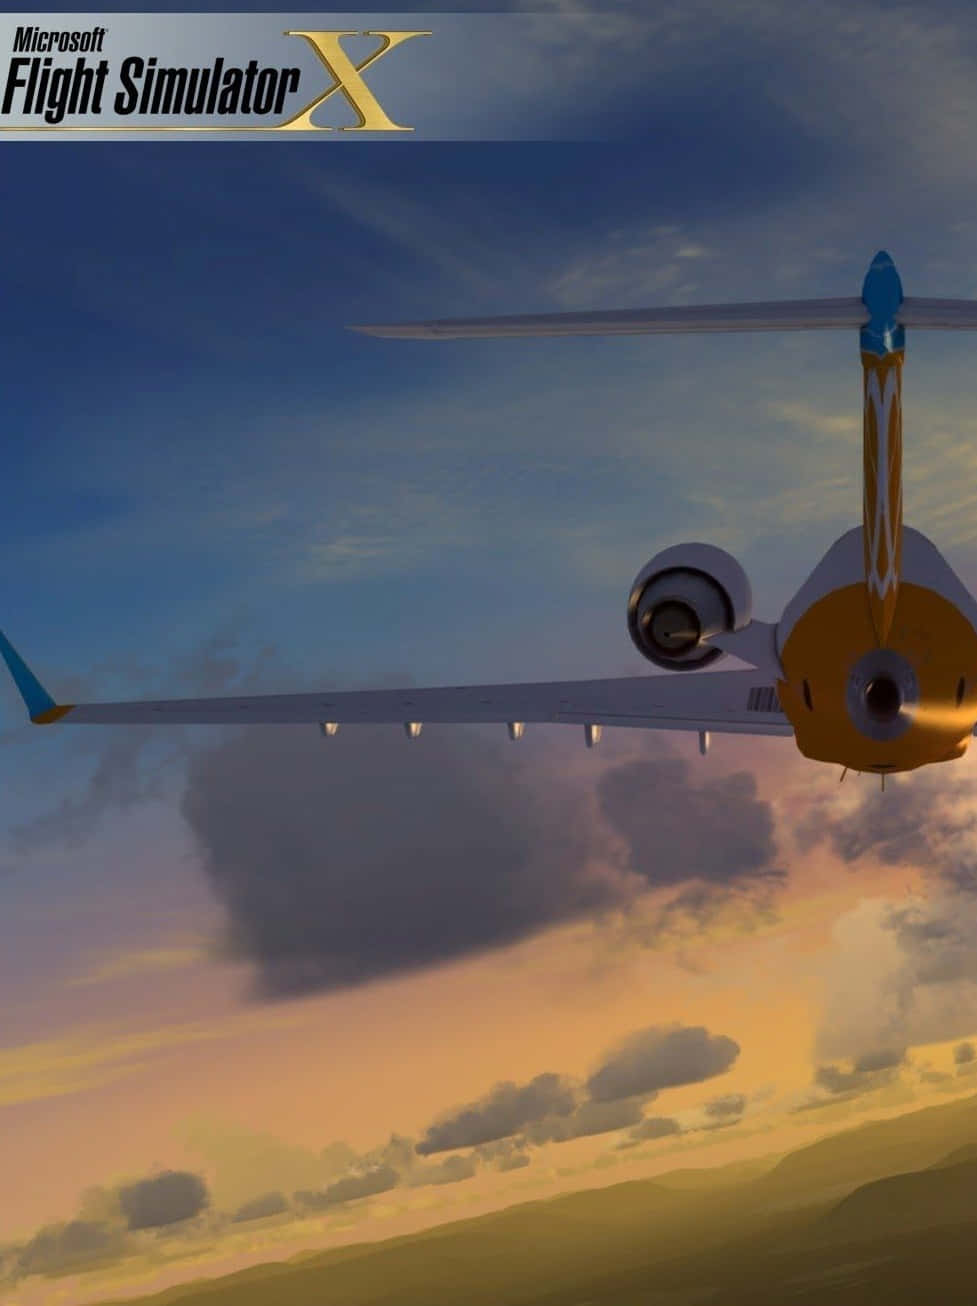 'Adventure Awaits in Android Microsoft Flight Simulator!'